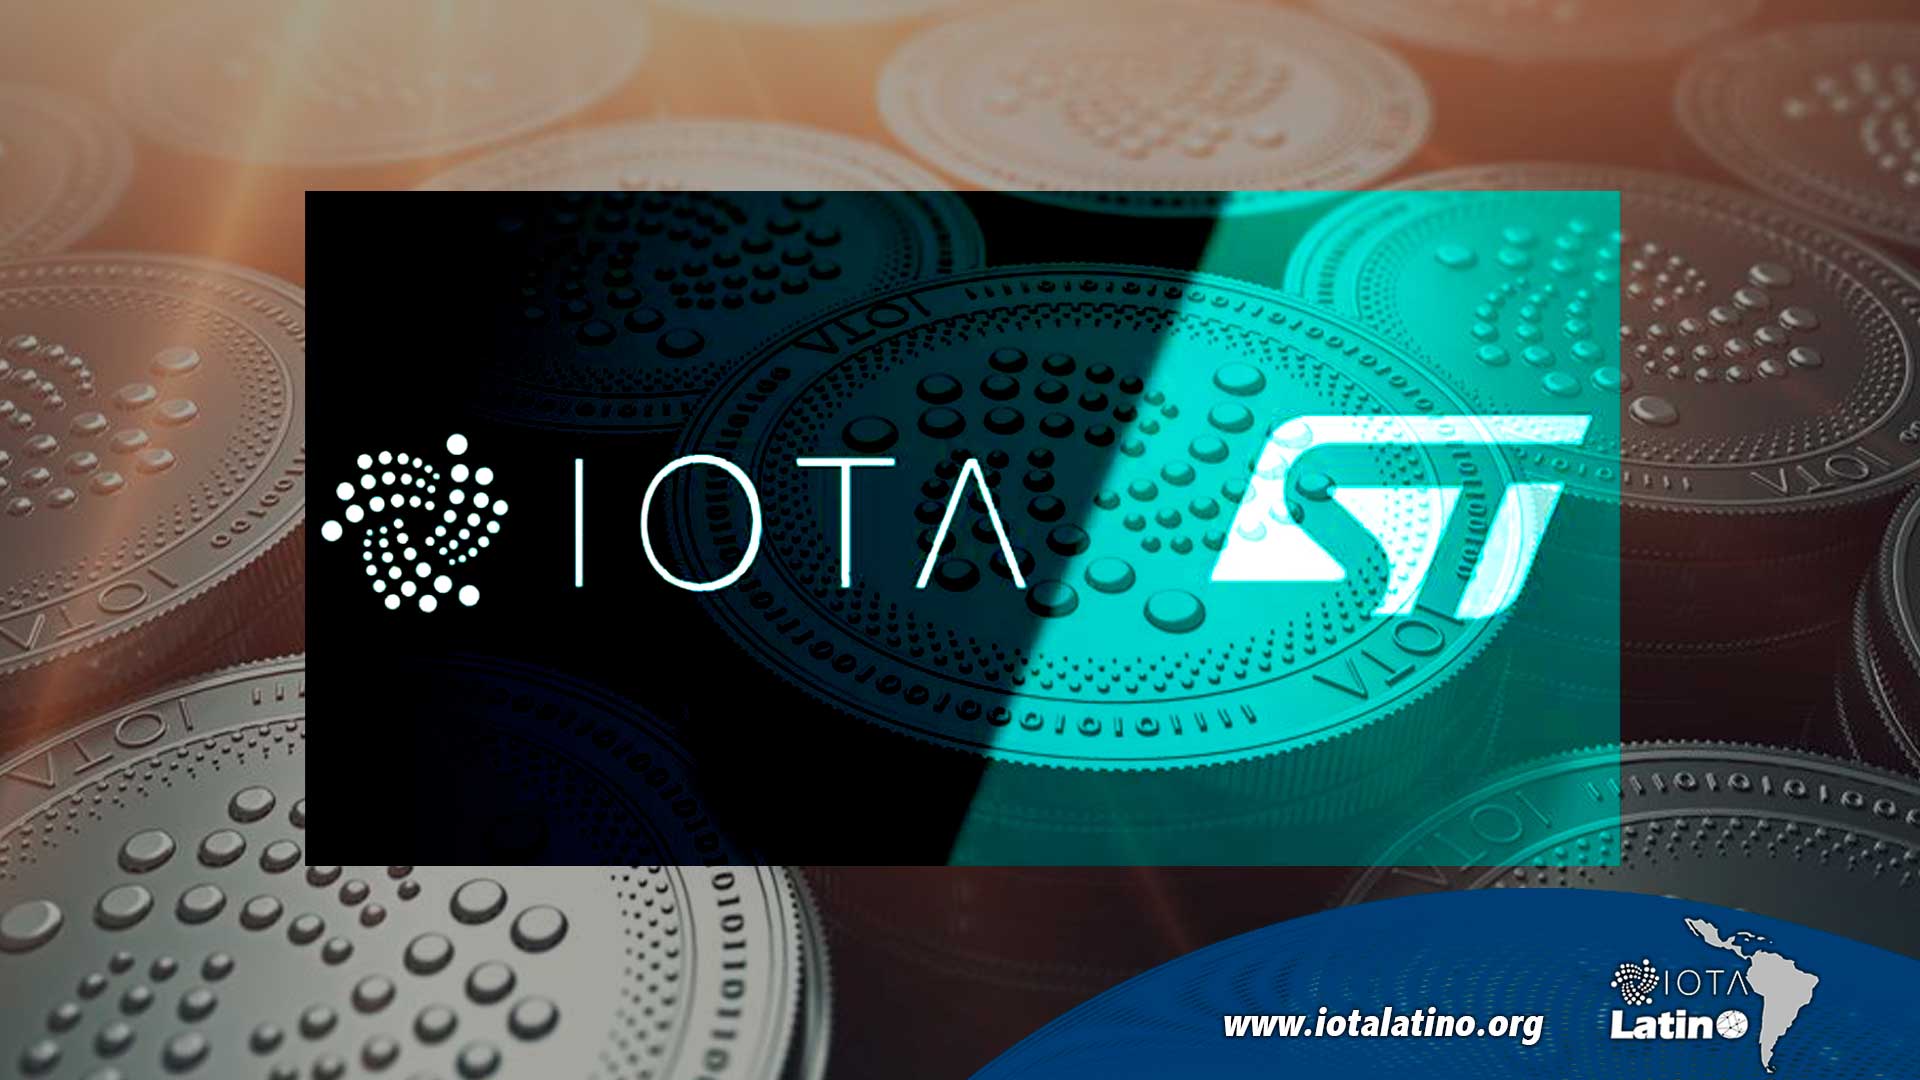 IOTA STMicroelectronics - IOTA Latino